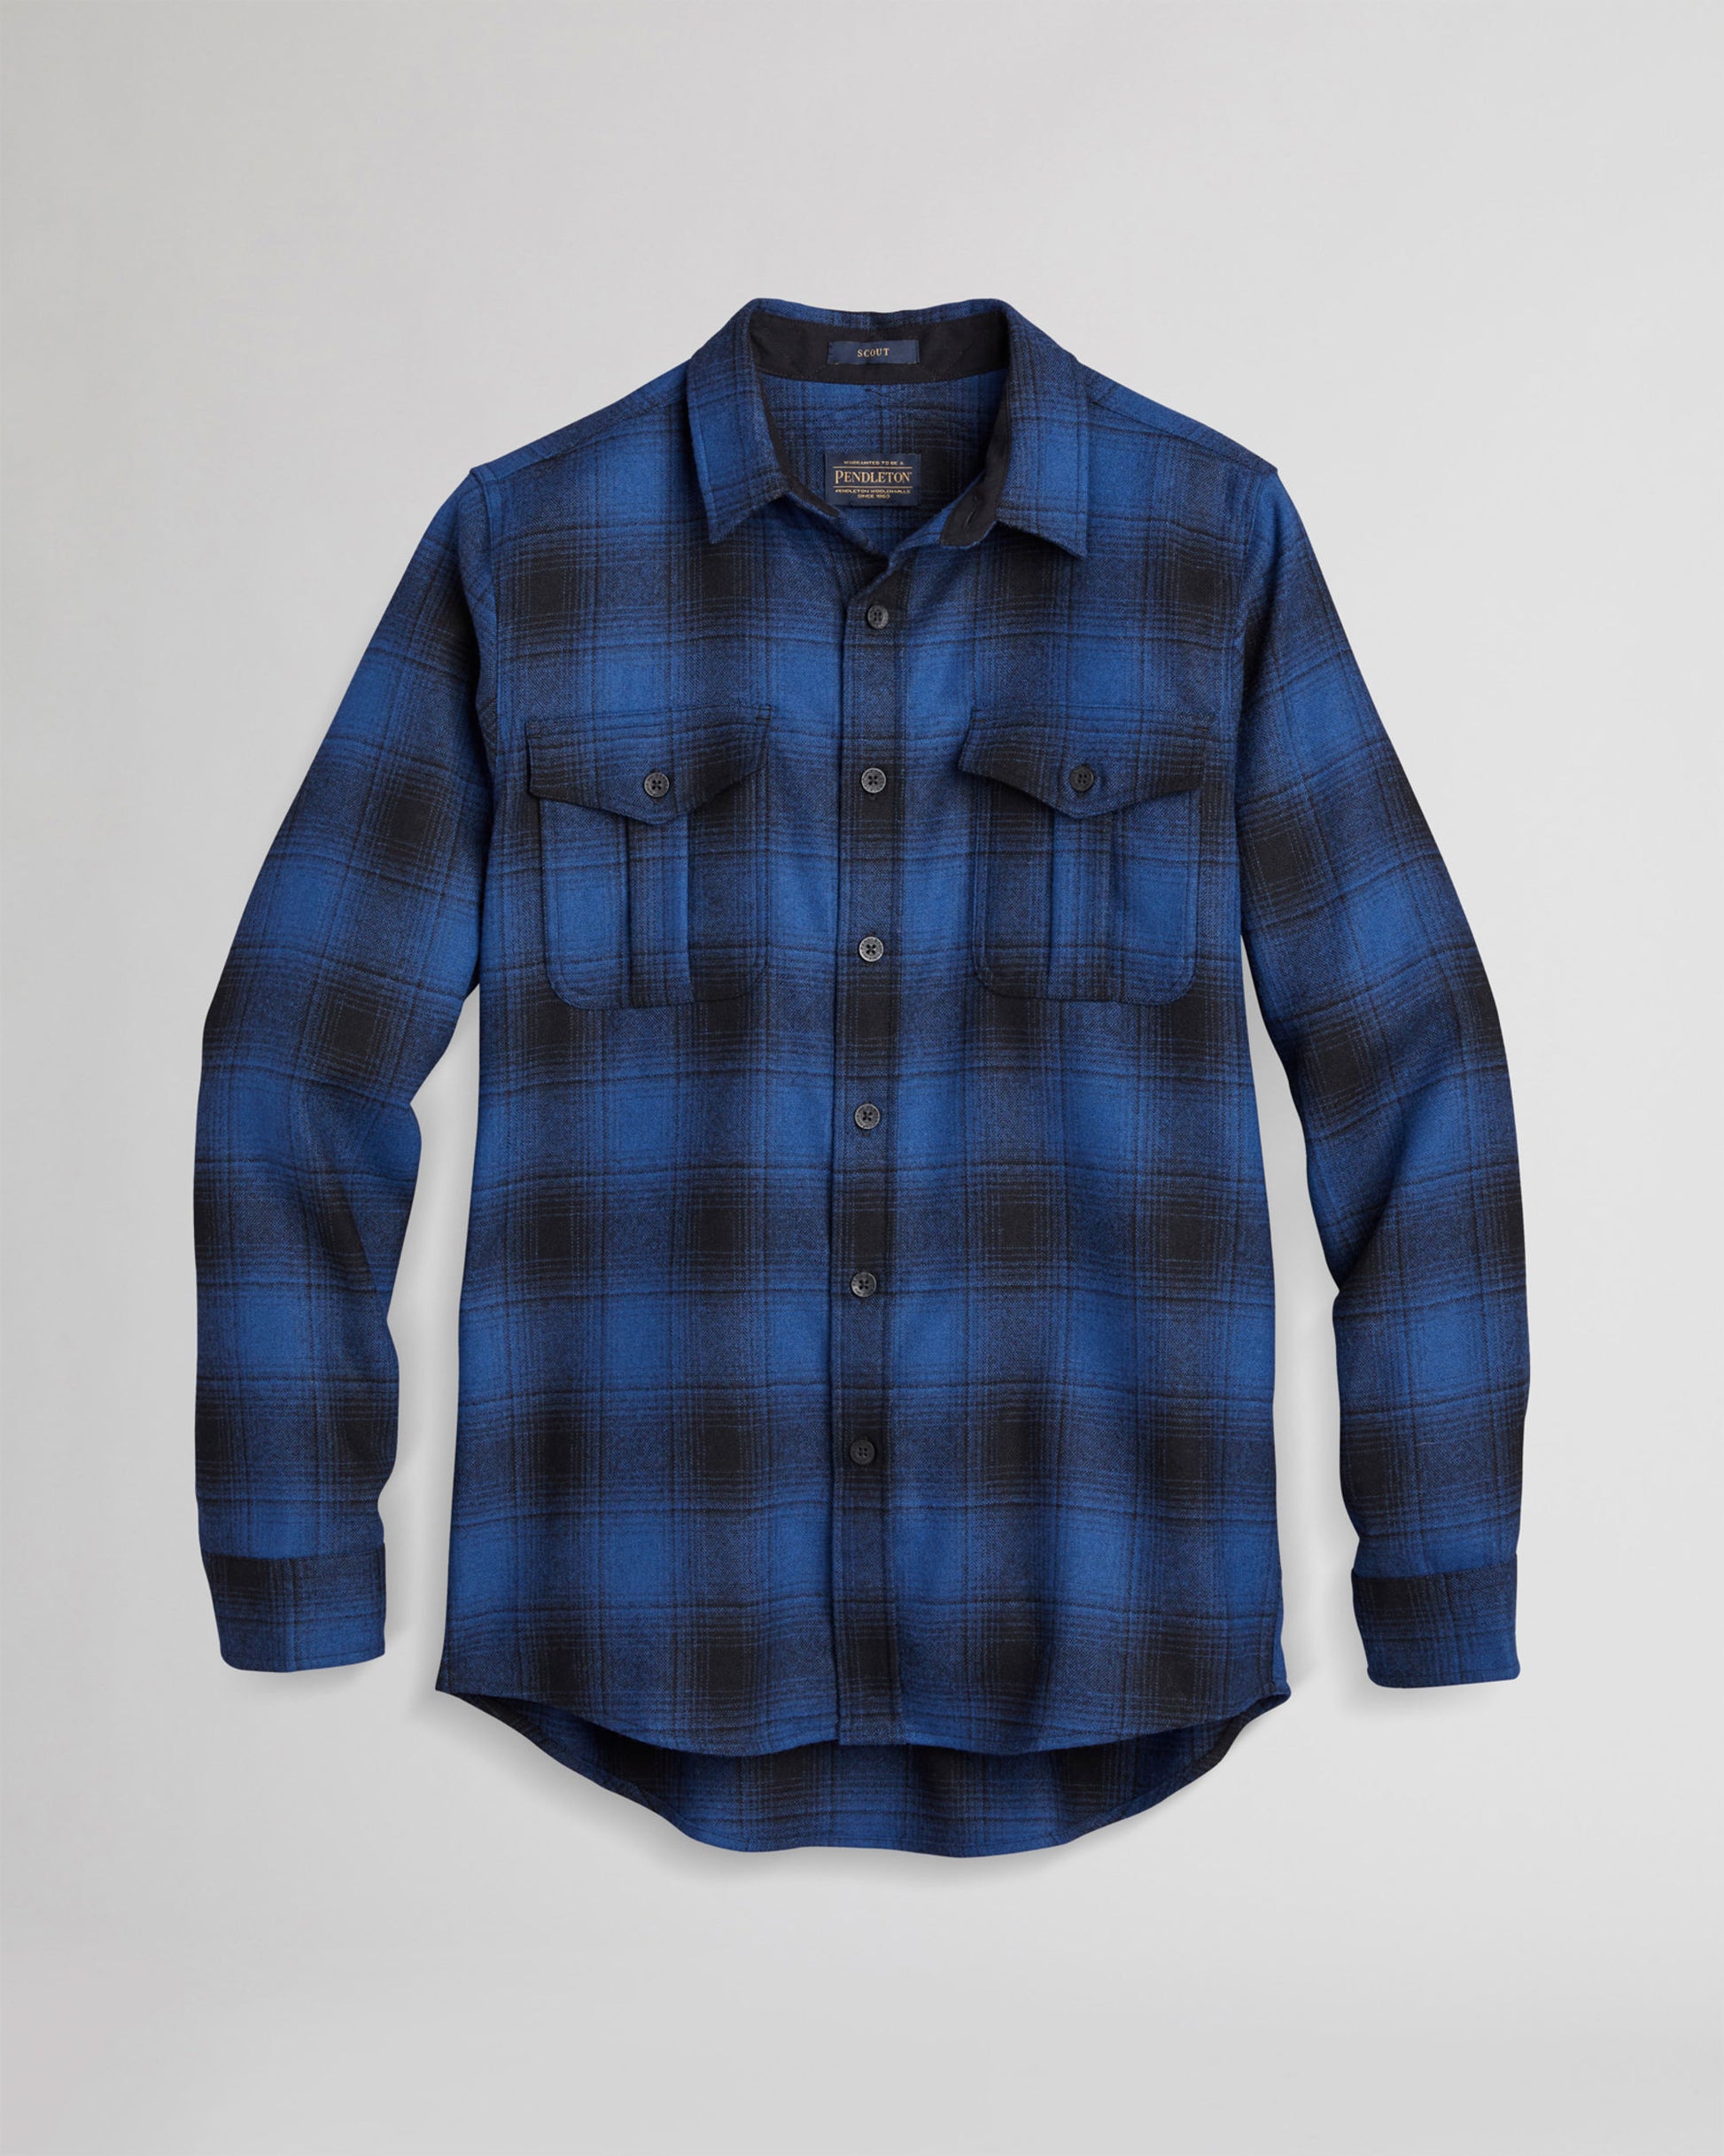 Pendleton Scout blue and black plaid button down shirt